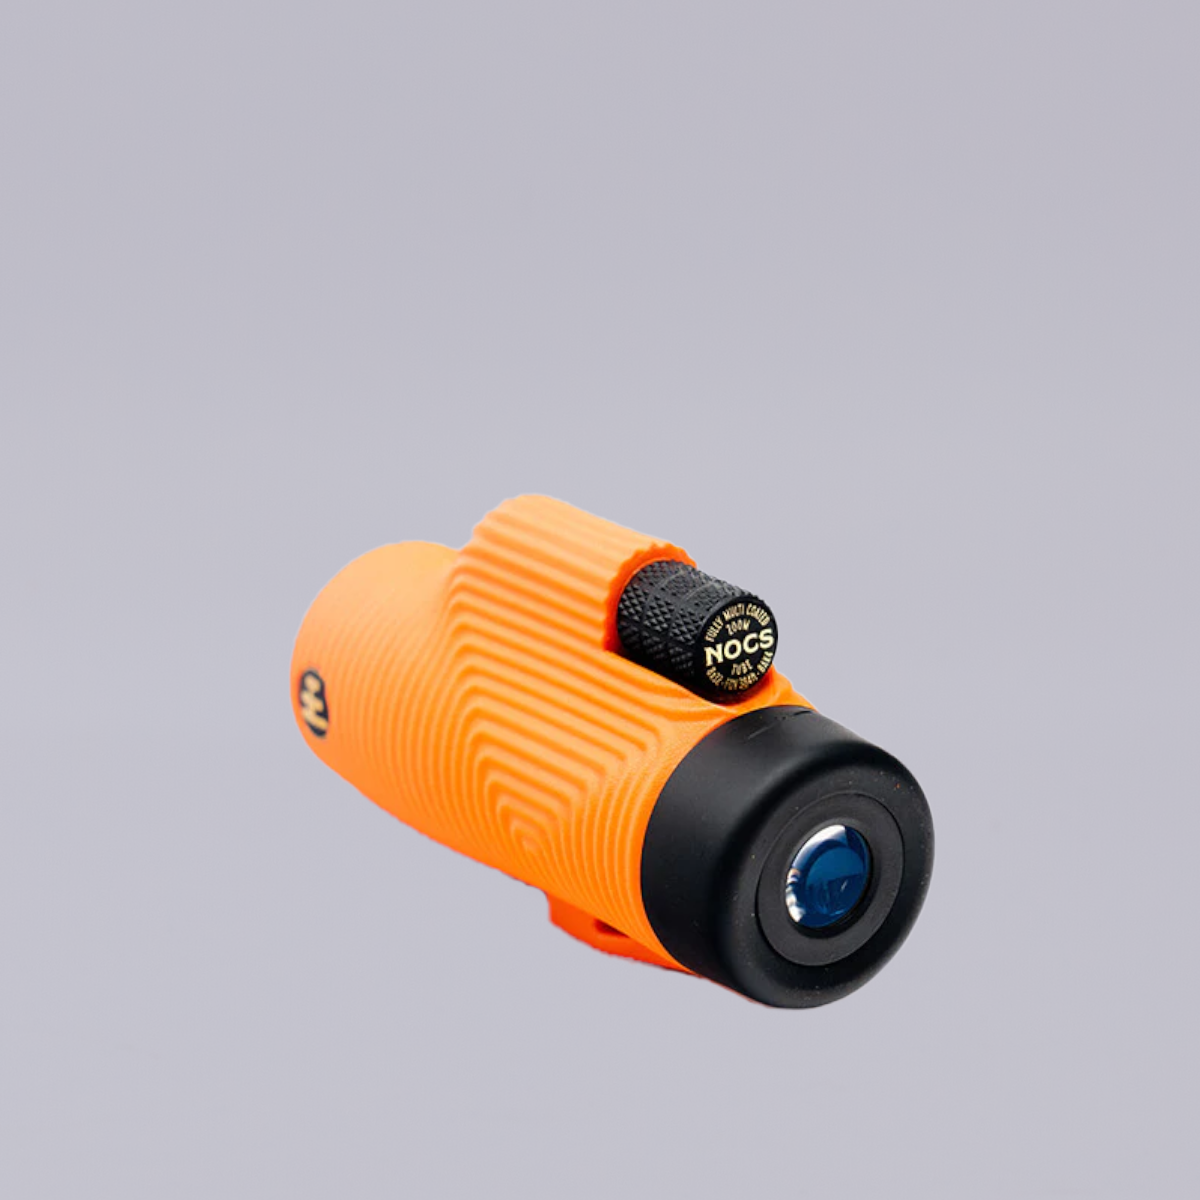 Nocs | Monocular Telescope | Safety Orange